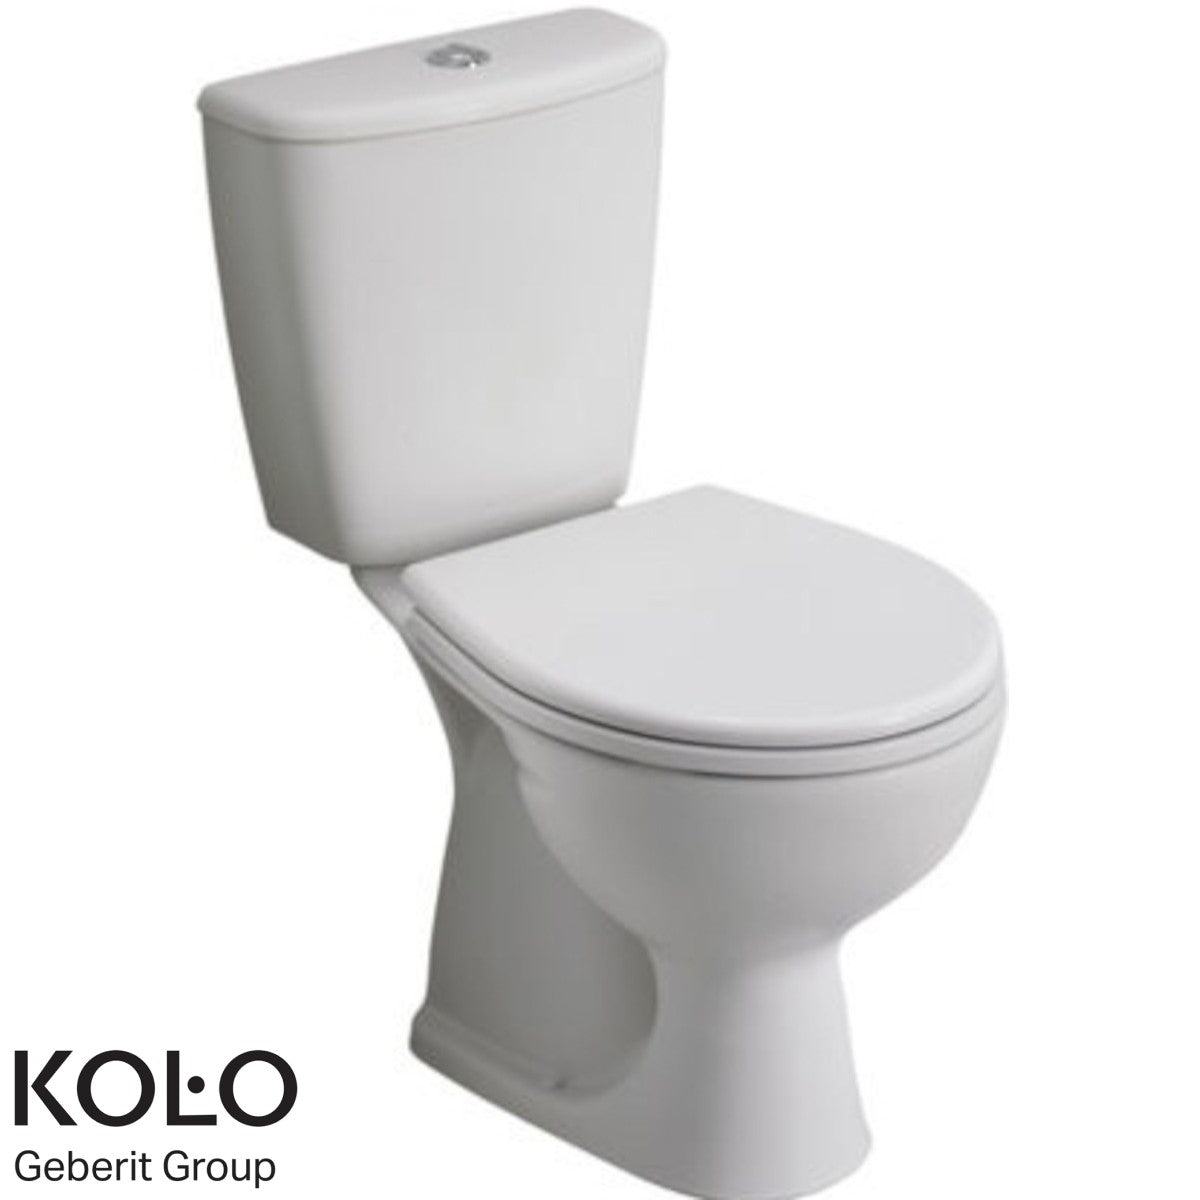 K99005000 Kolo Rekord talna WC školjka monoblok